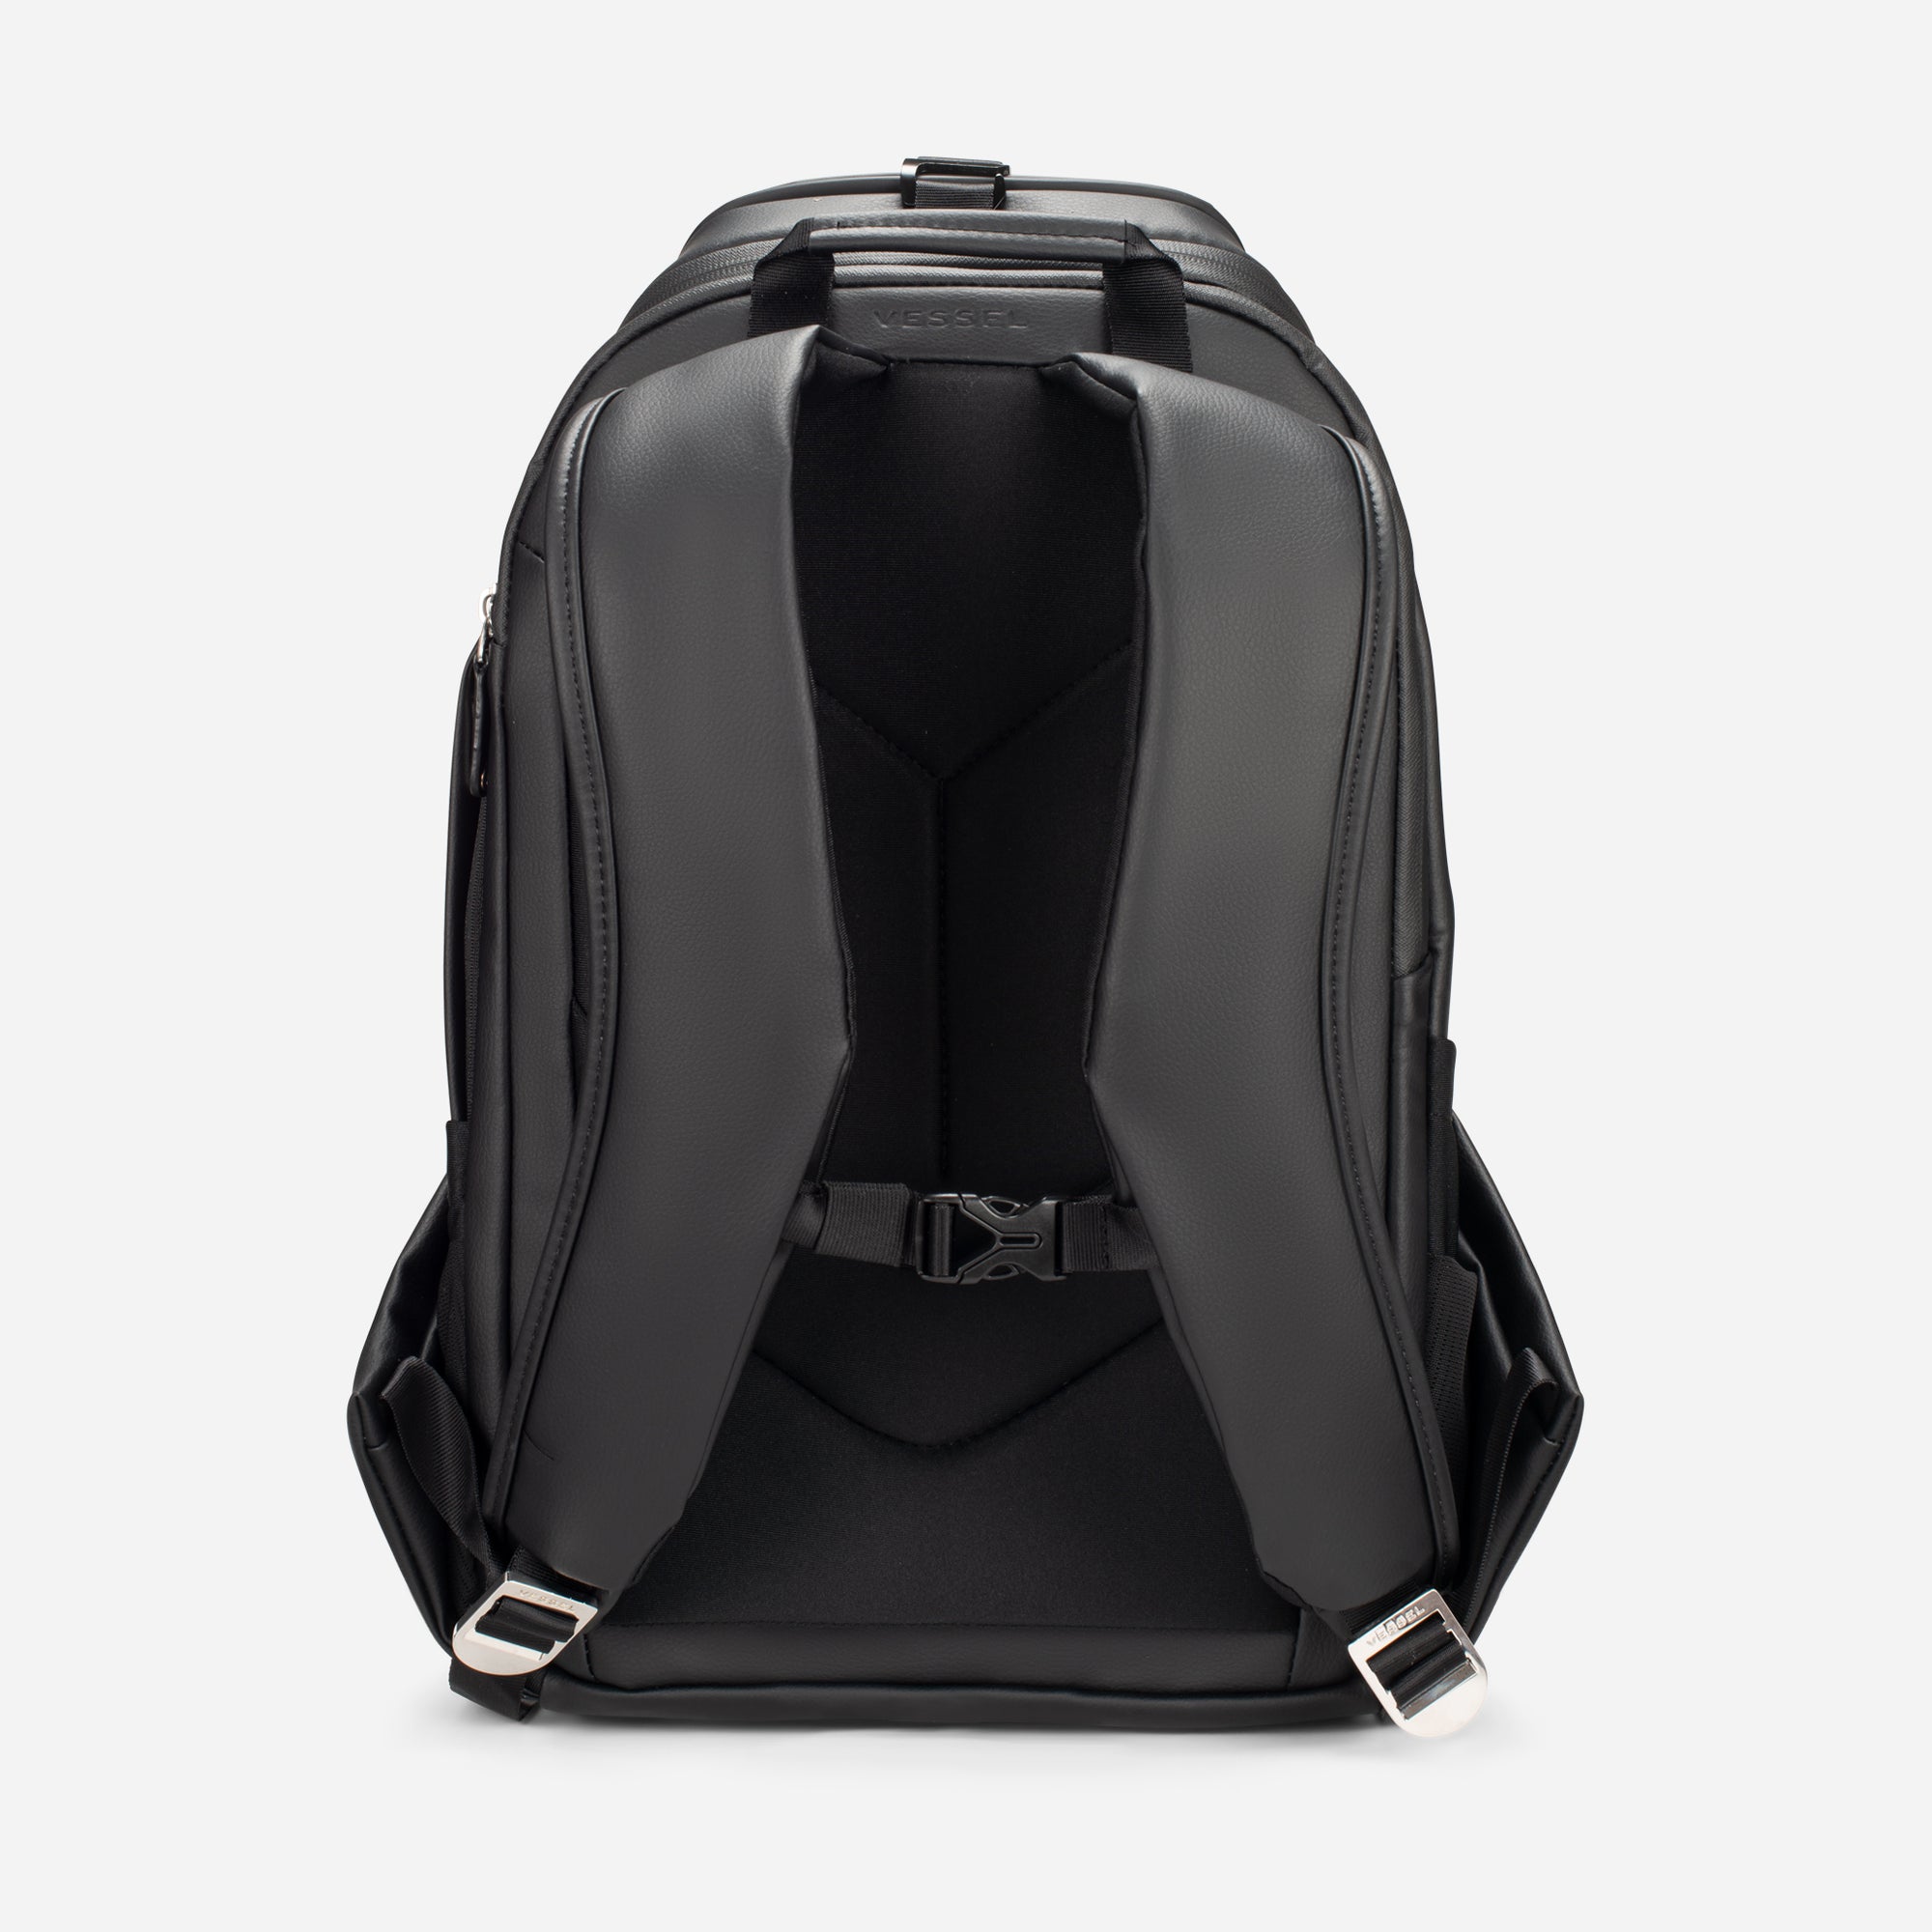 PrimeX Backpack